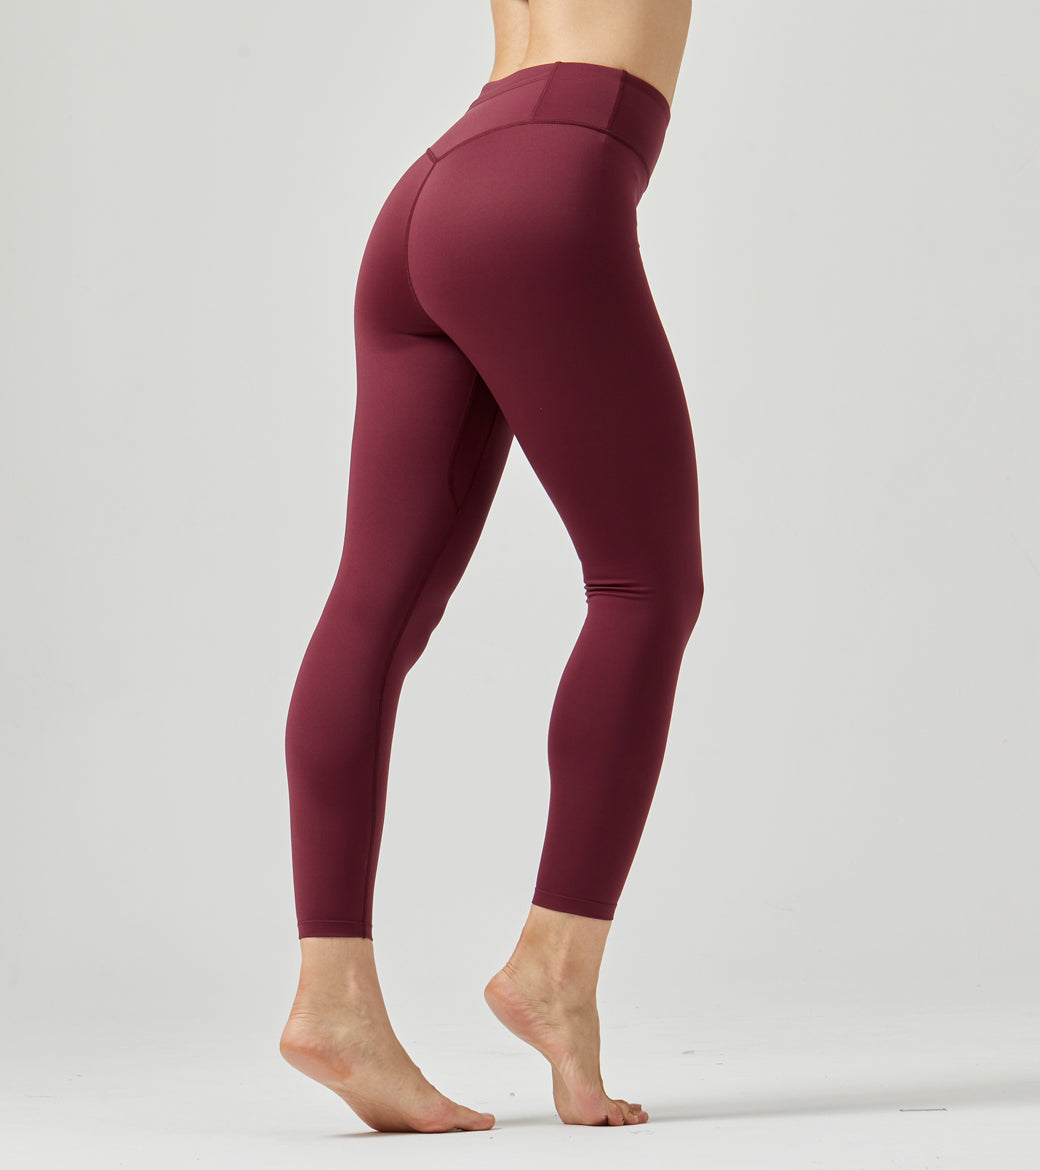 LOVESOFT Women's Dark Red Easy Warm Yarm Leggings High Waist Hips Running Yoga Pants